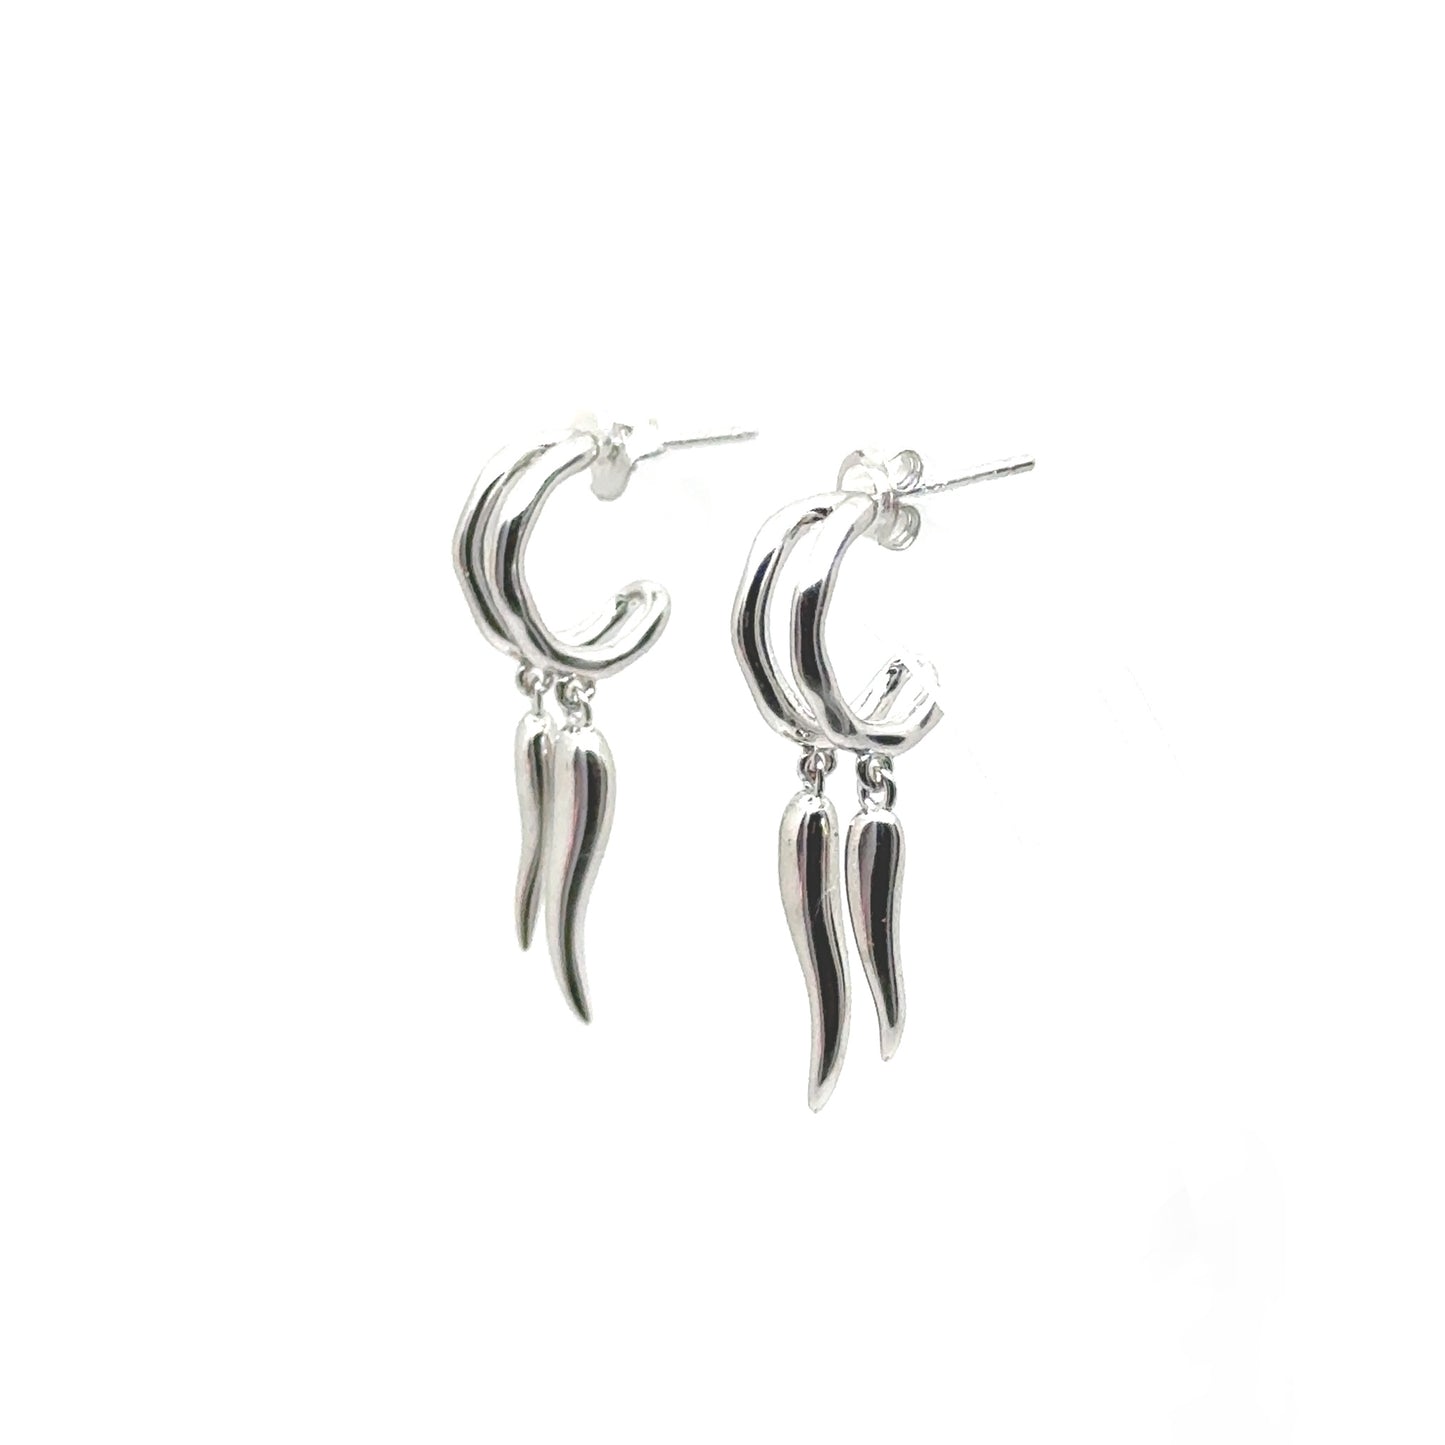 Doppio Italian Horn Earrings in Sterling Silver or 18k Gold Over Silver